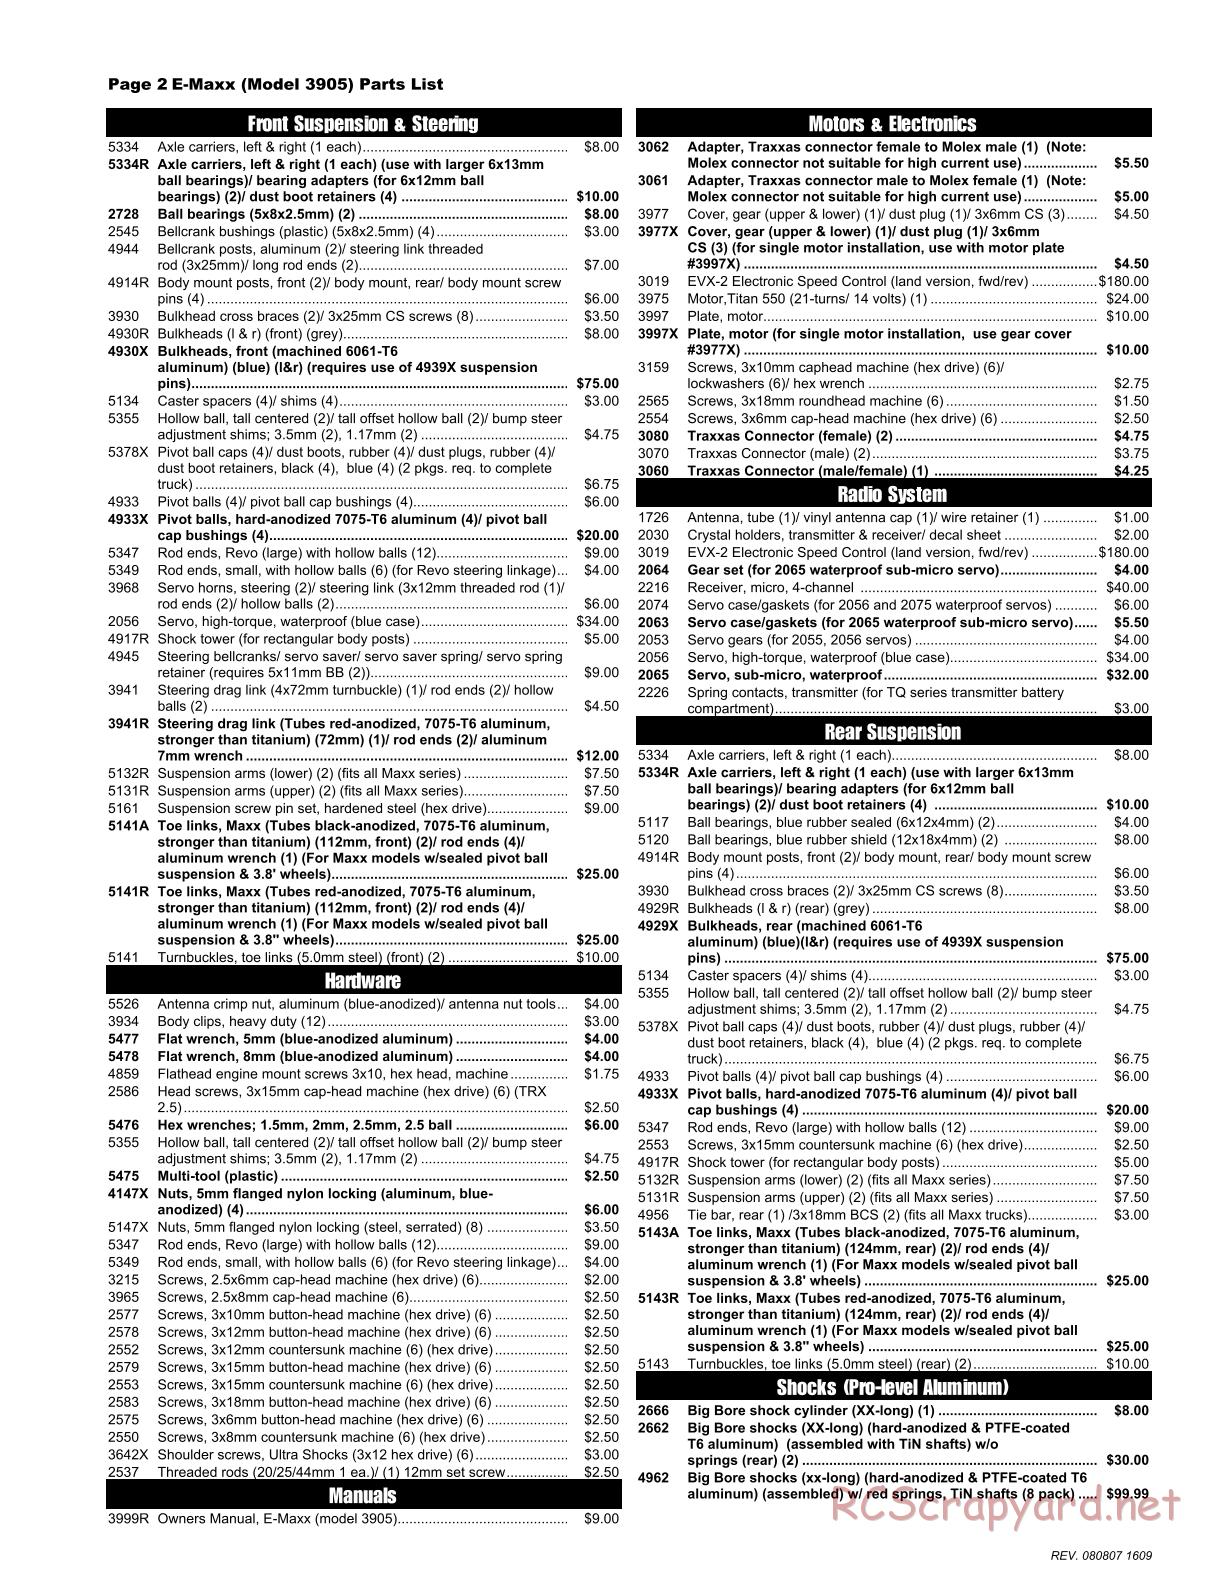 Traxxas - E-Maxx (2007) - Parts List - Page 2